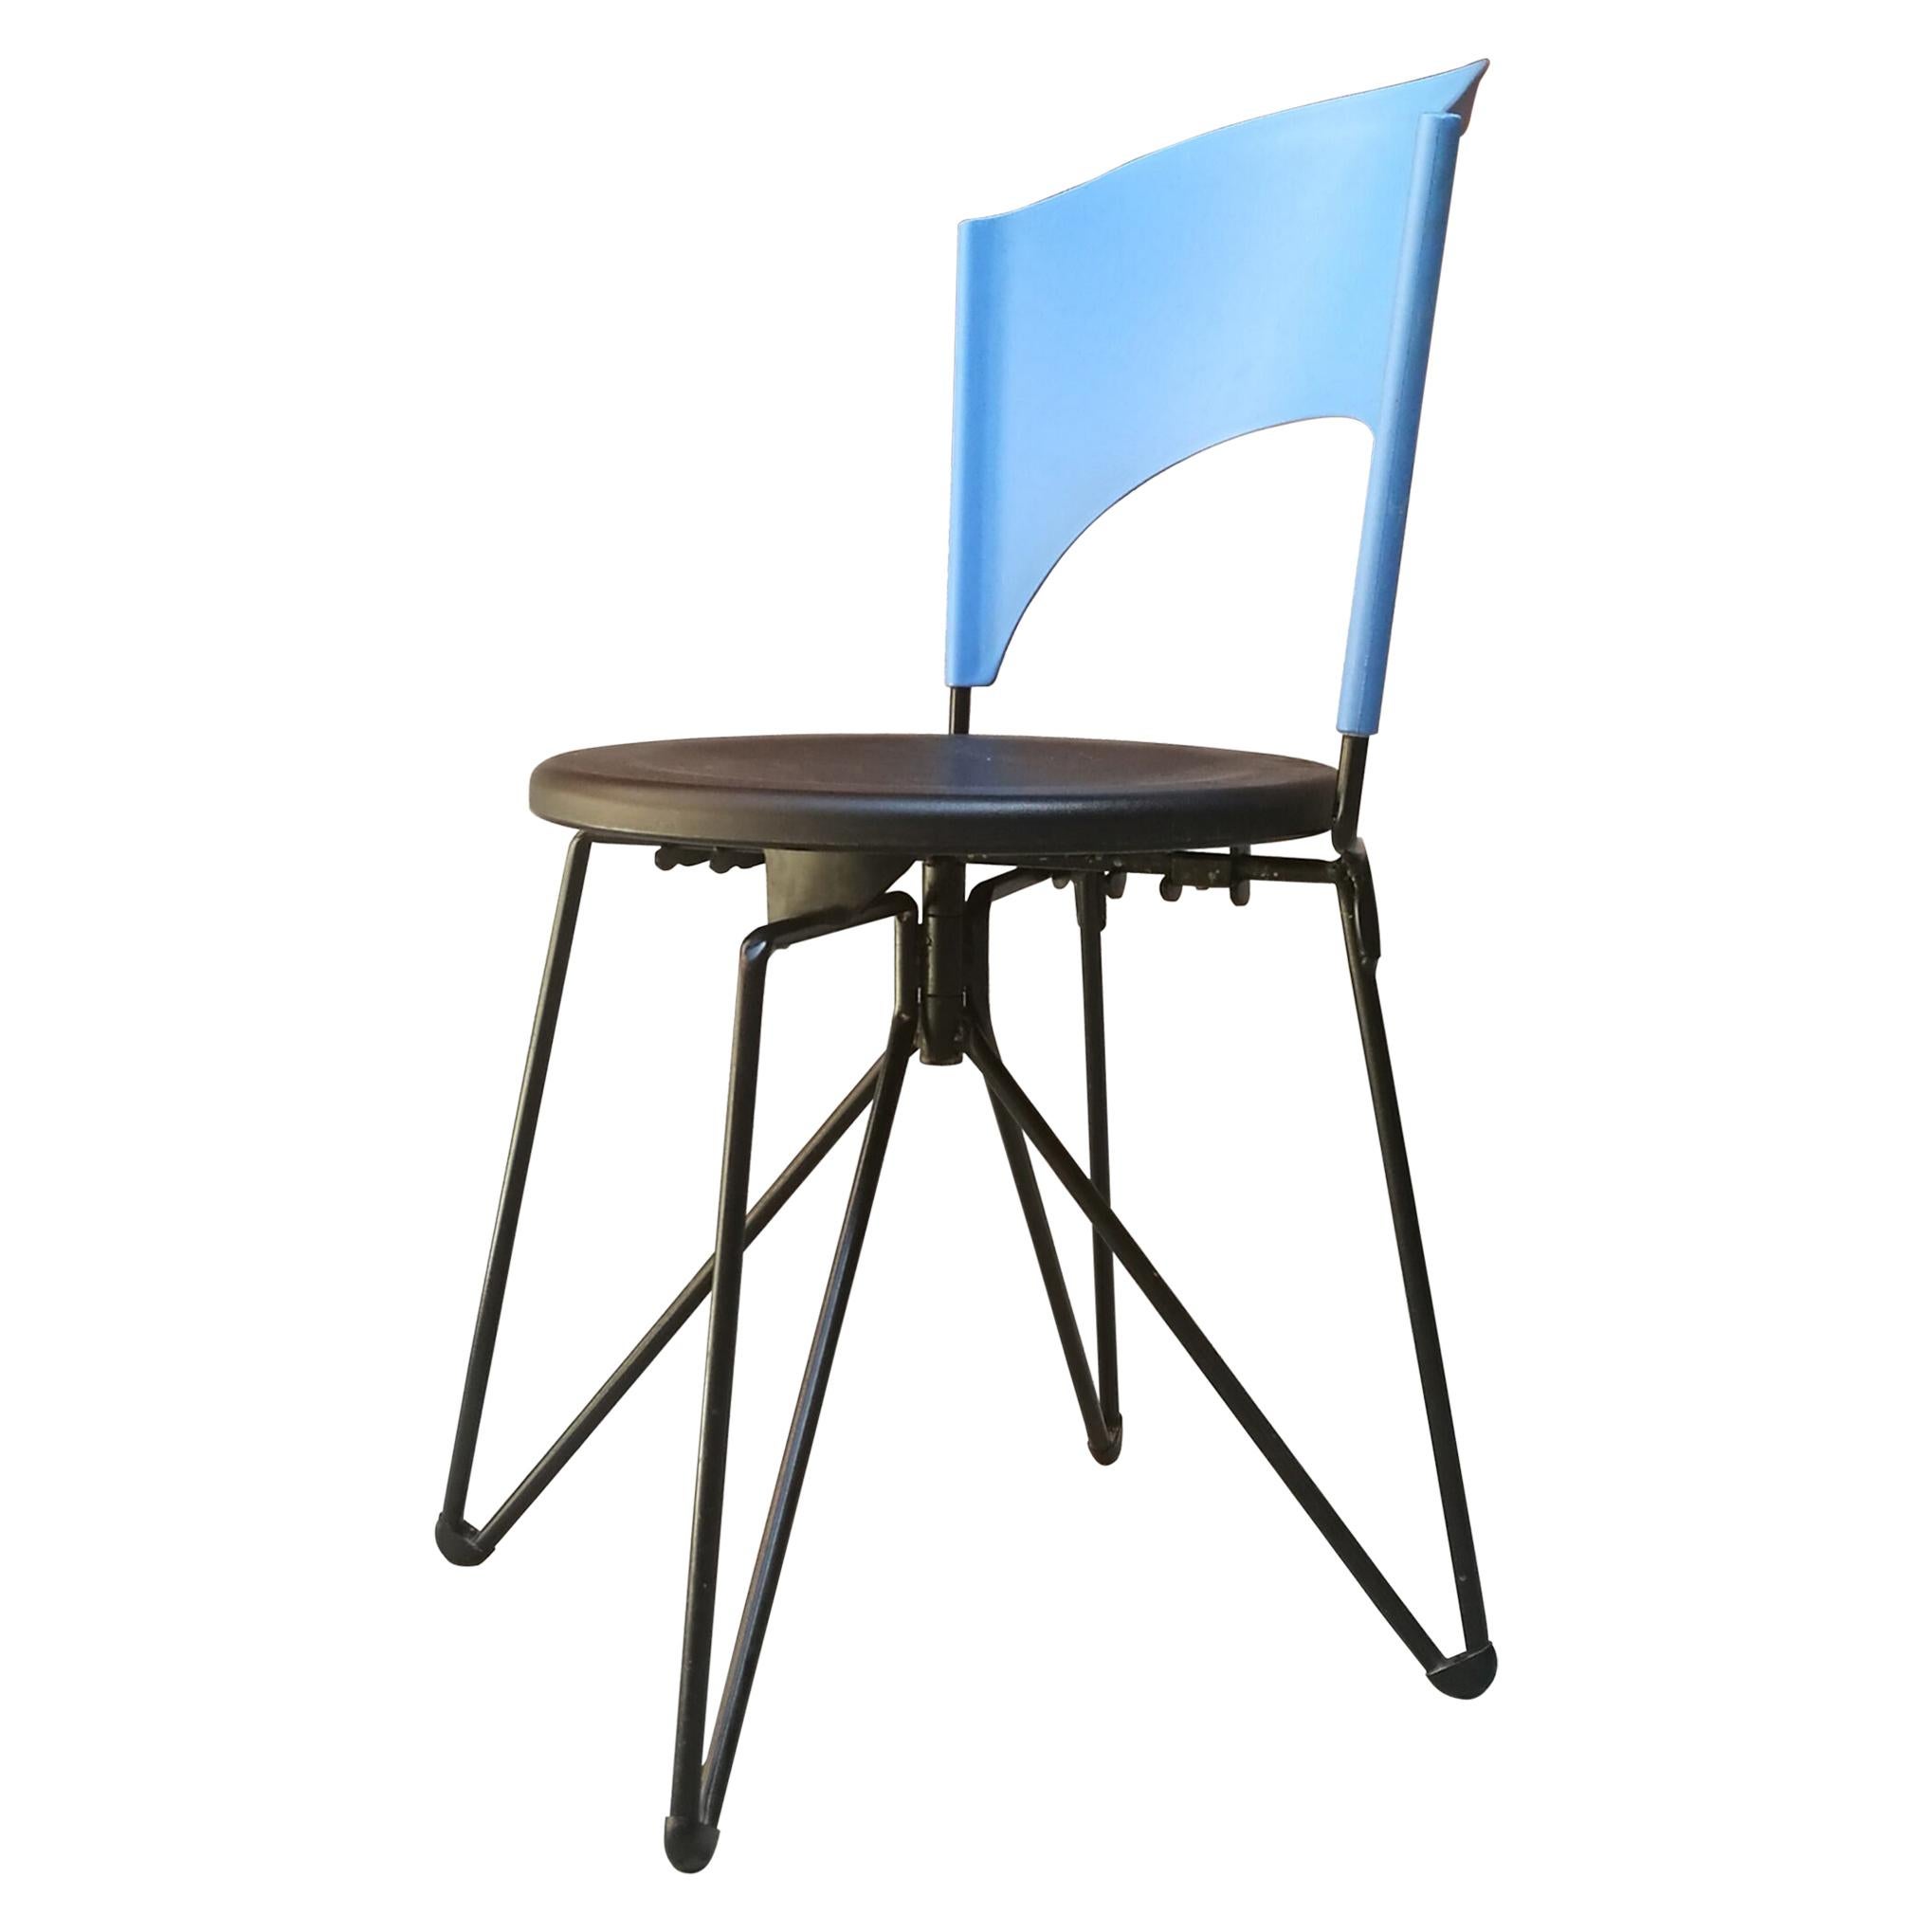 Italian Plastic Folding Chair by Cardo Bartoli for Bonaldo design, 1980s